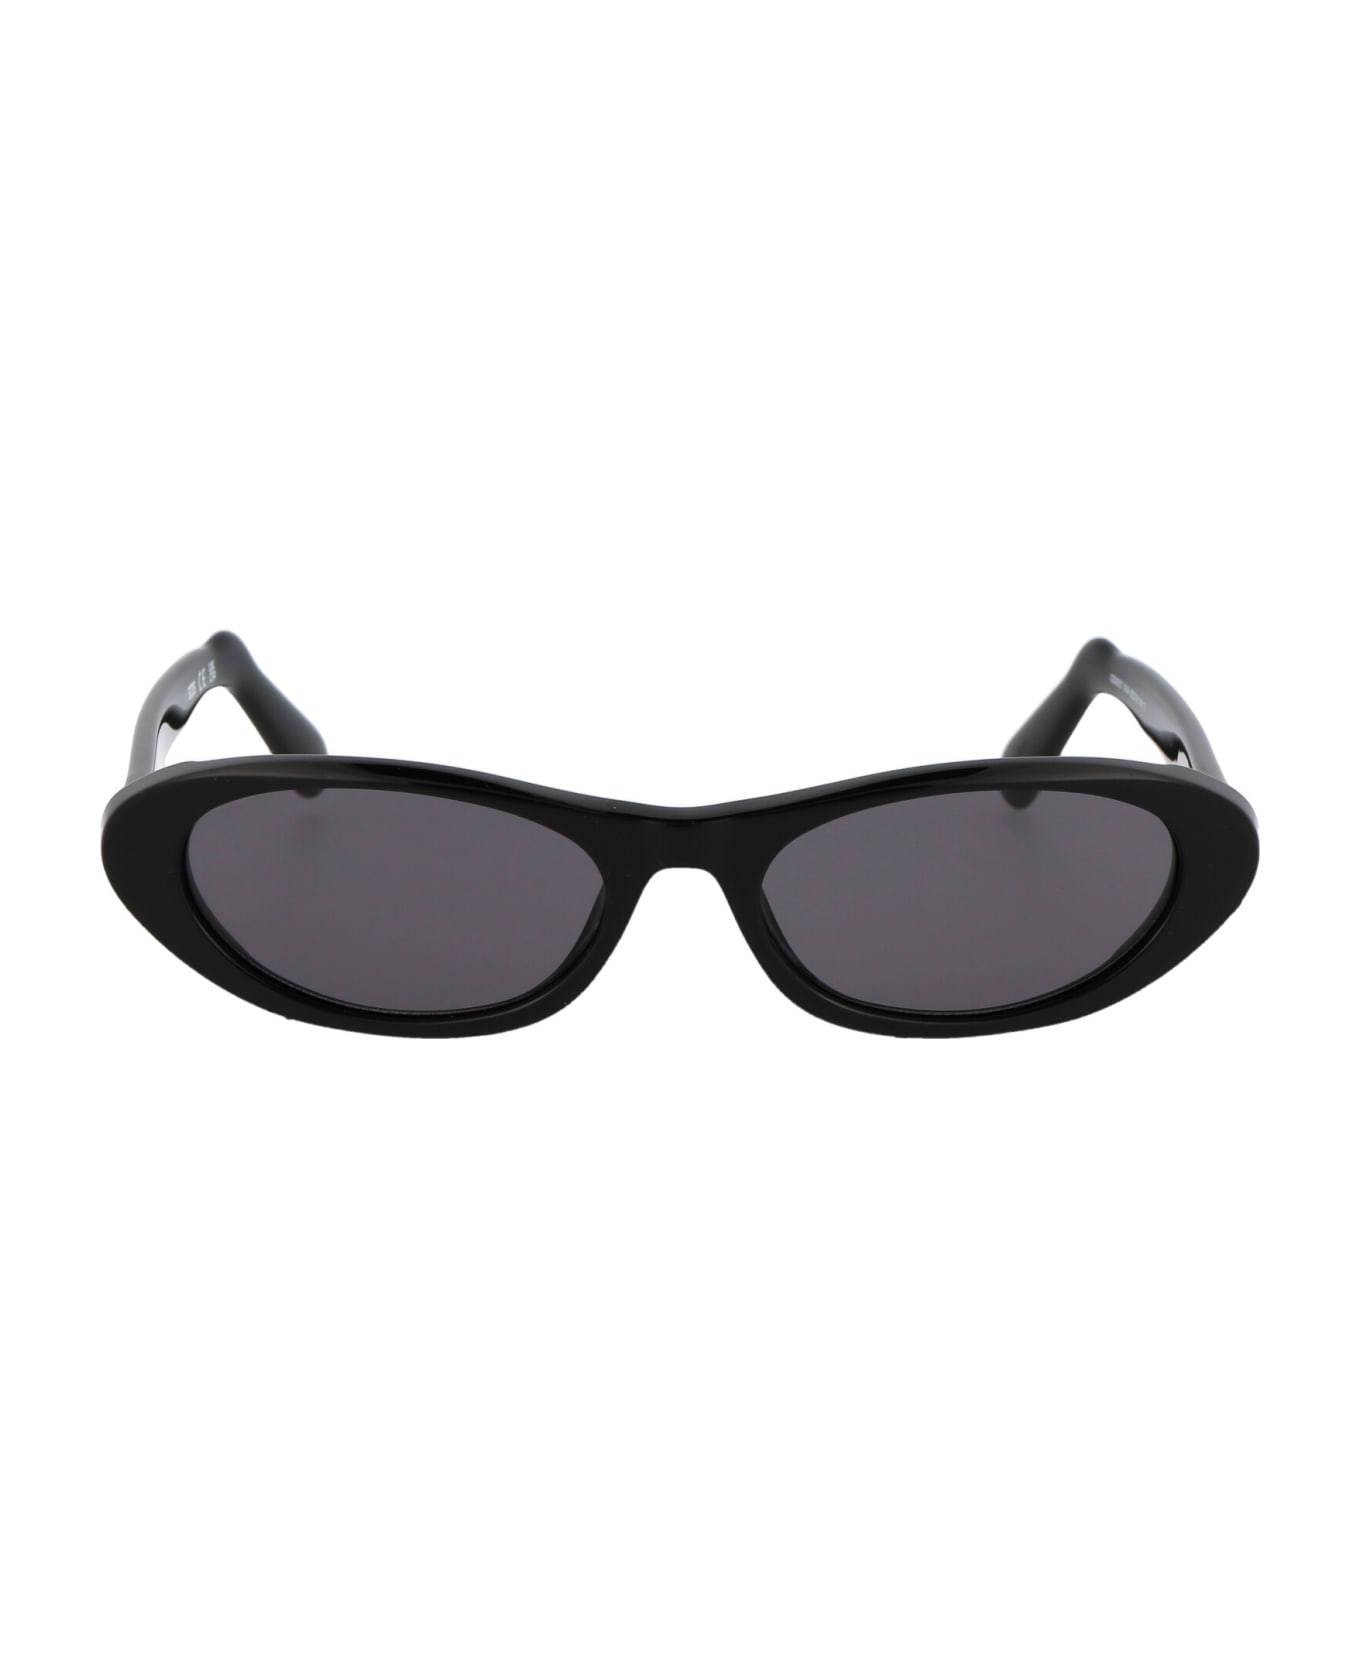 GCDS Gd0021 Sunglasses - 01A BLACK